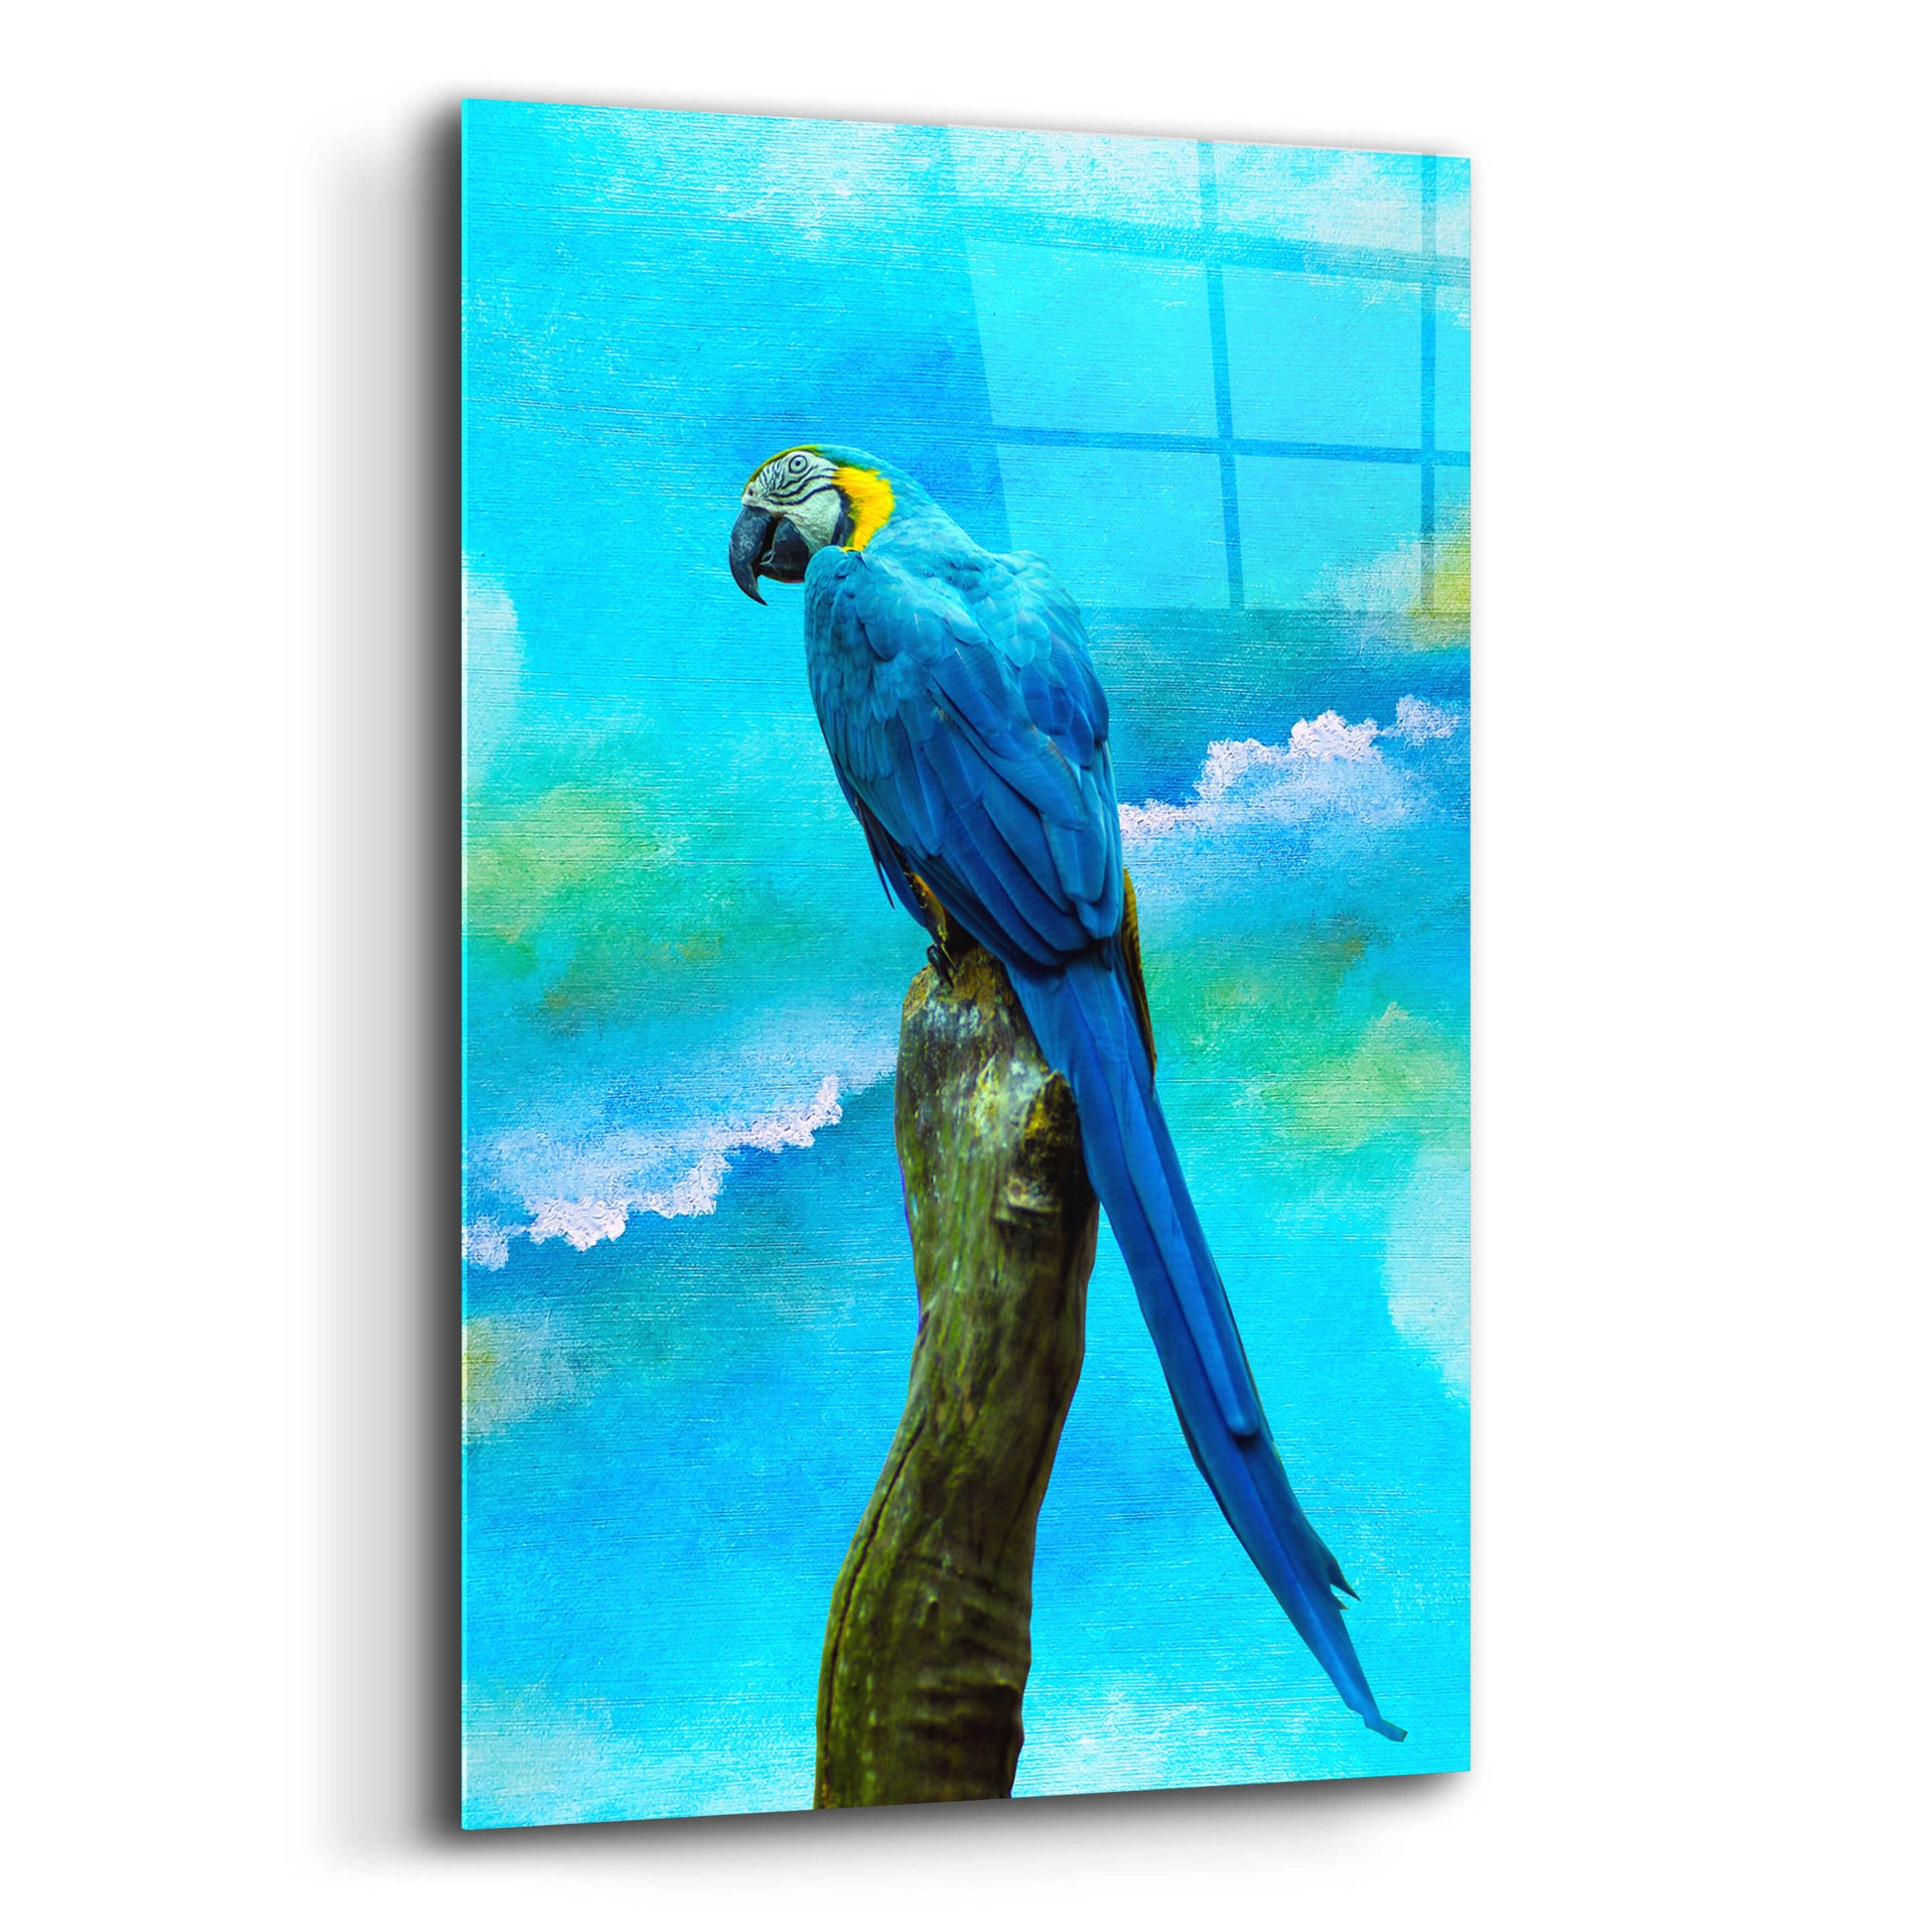 Epic Art 'Blue Parrot' by Ata Alishahi, Acrylic Glass Wall Art,12x16